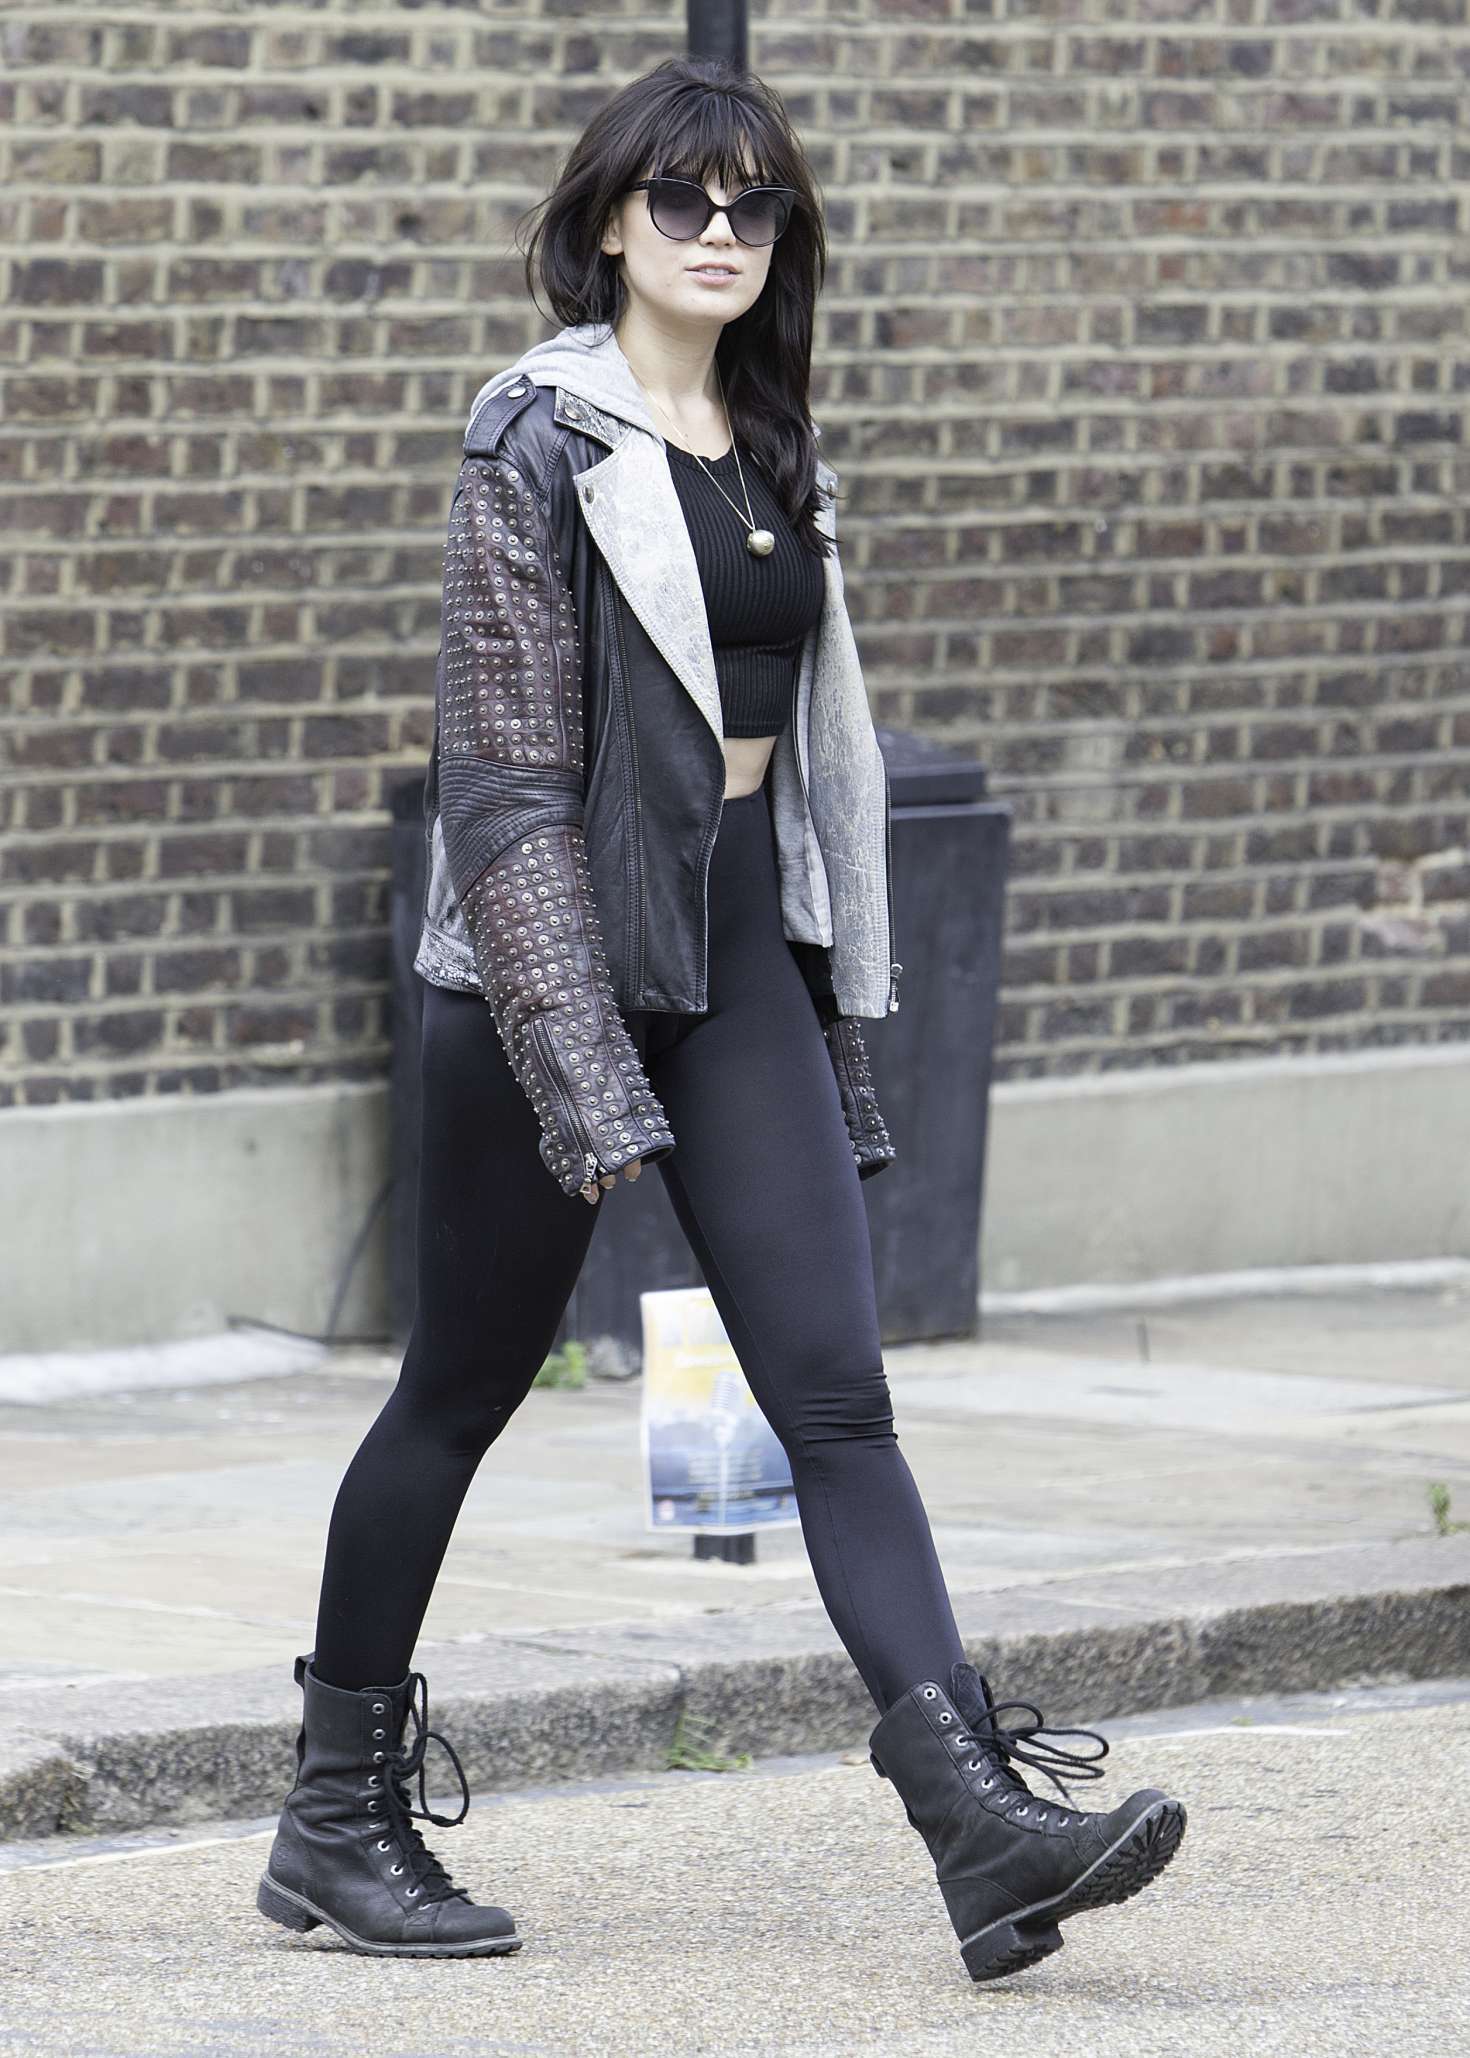 Daisy Lowe in Black Spandex out in London – GotCeleb